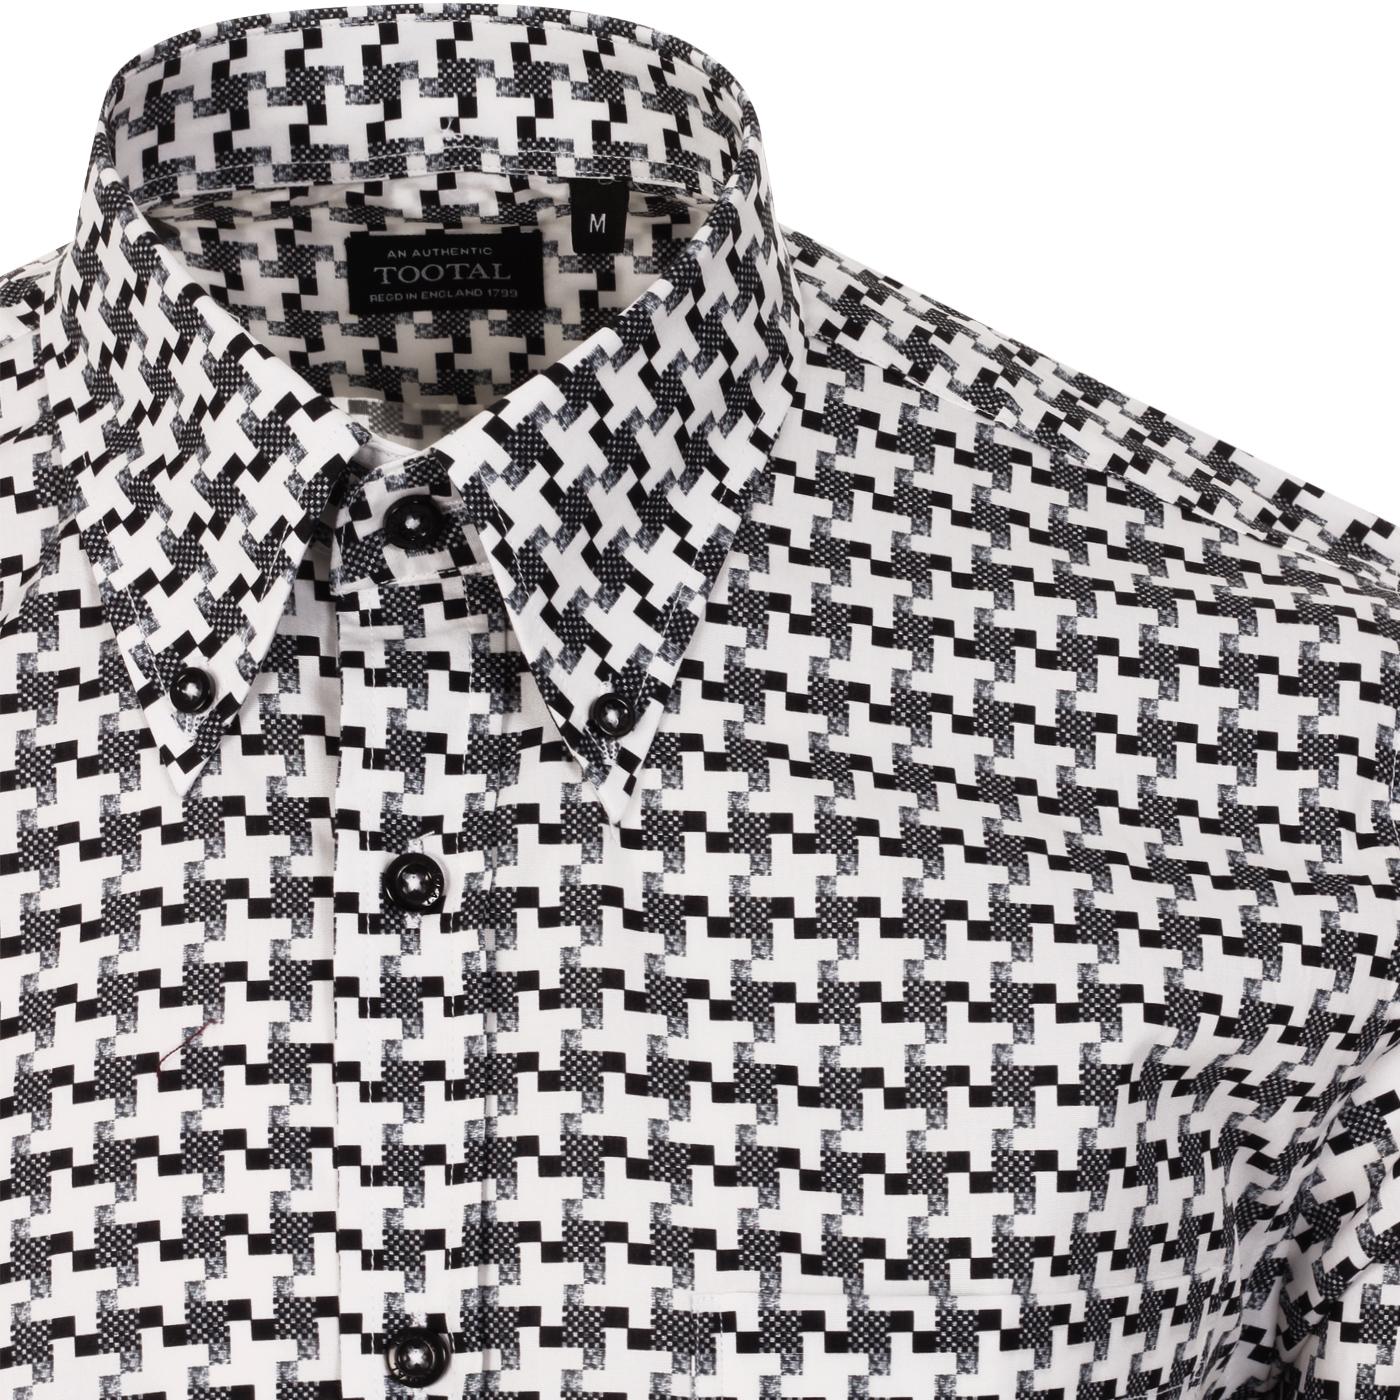 TOOTAL Houndstooth Textured Check Men's Retro Mod Shirt